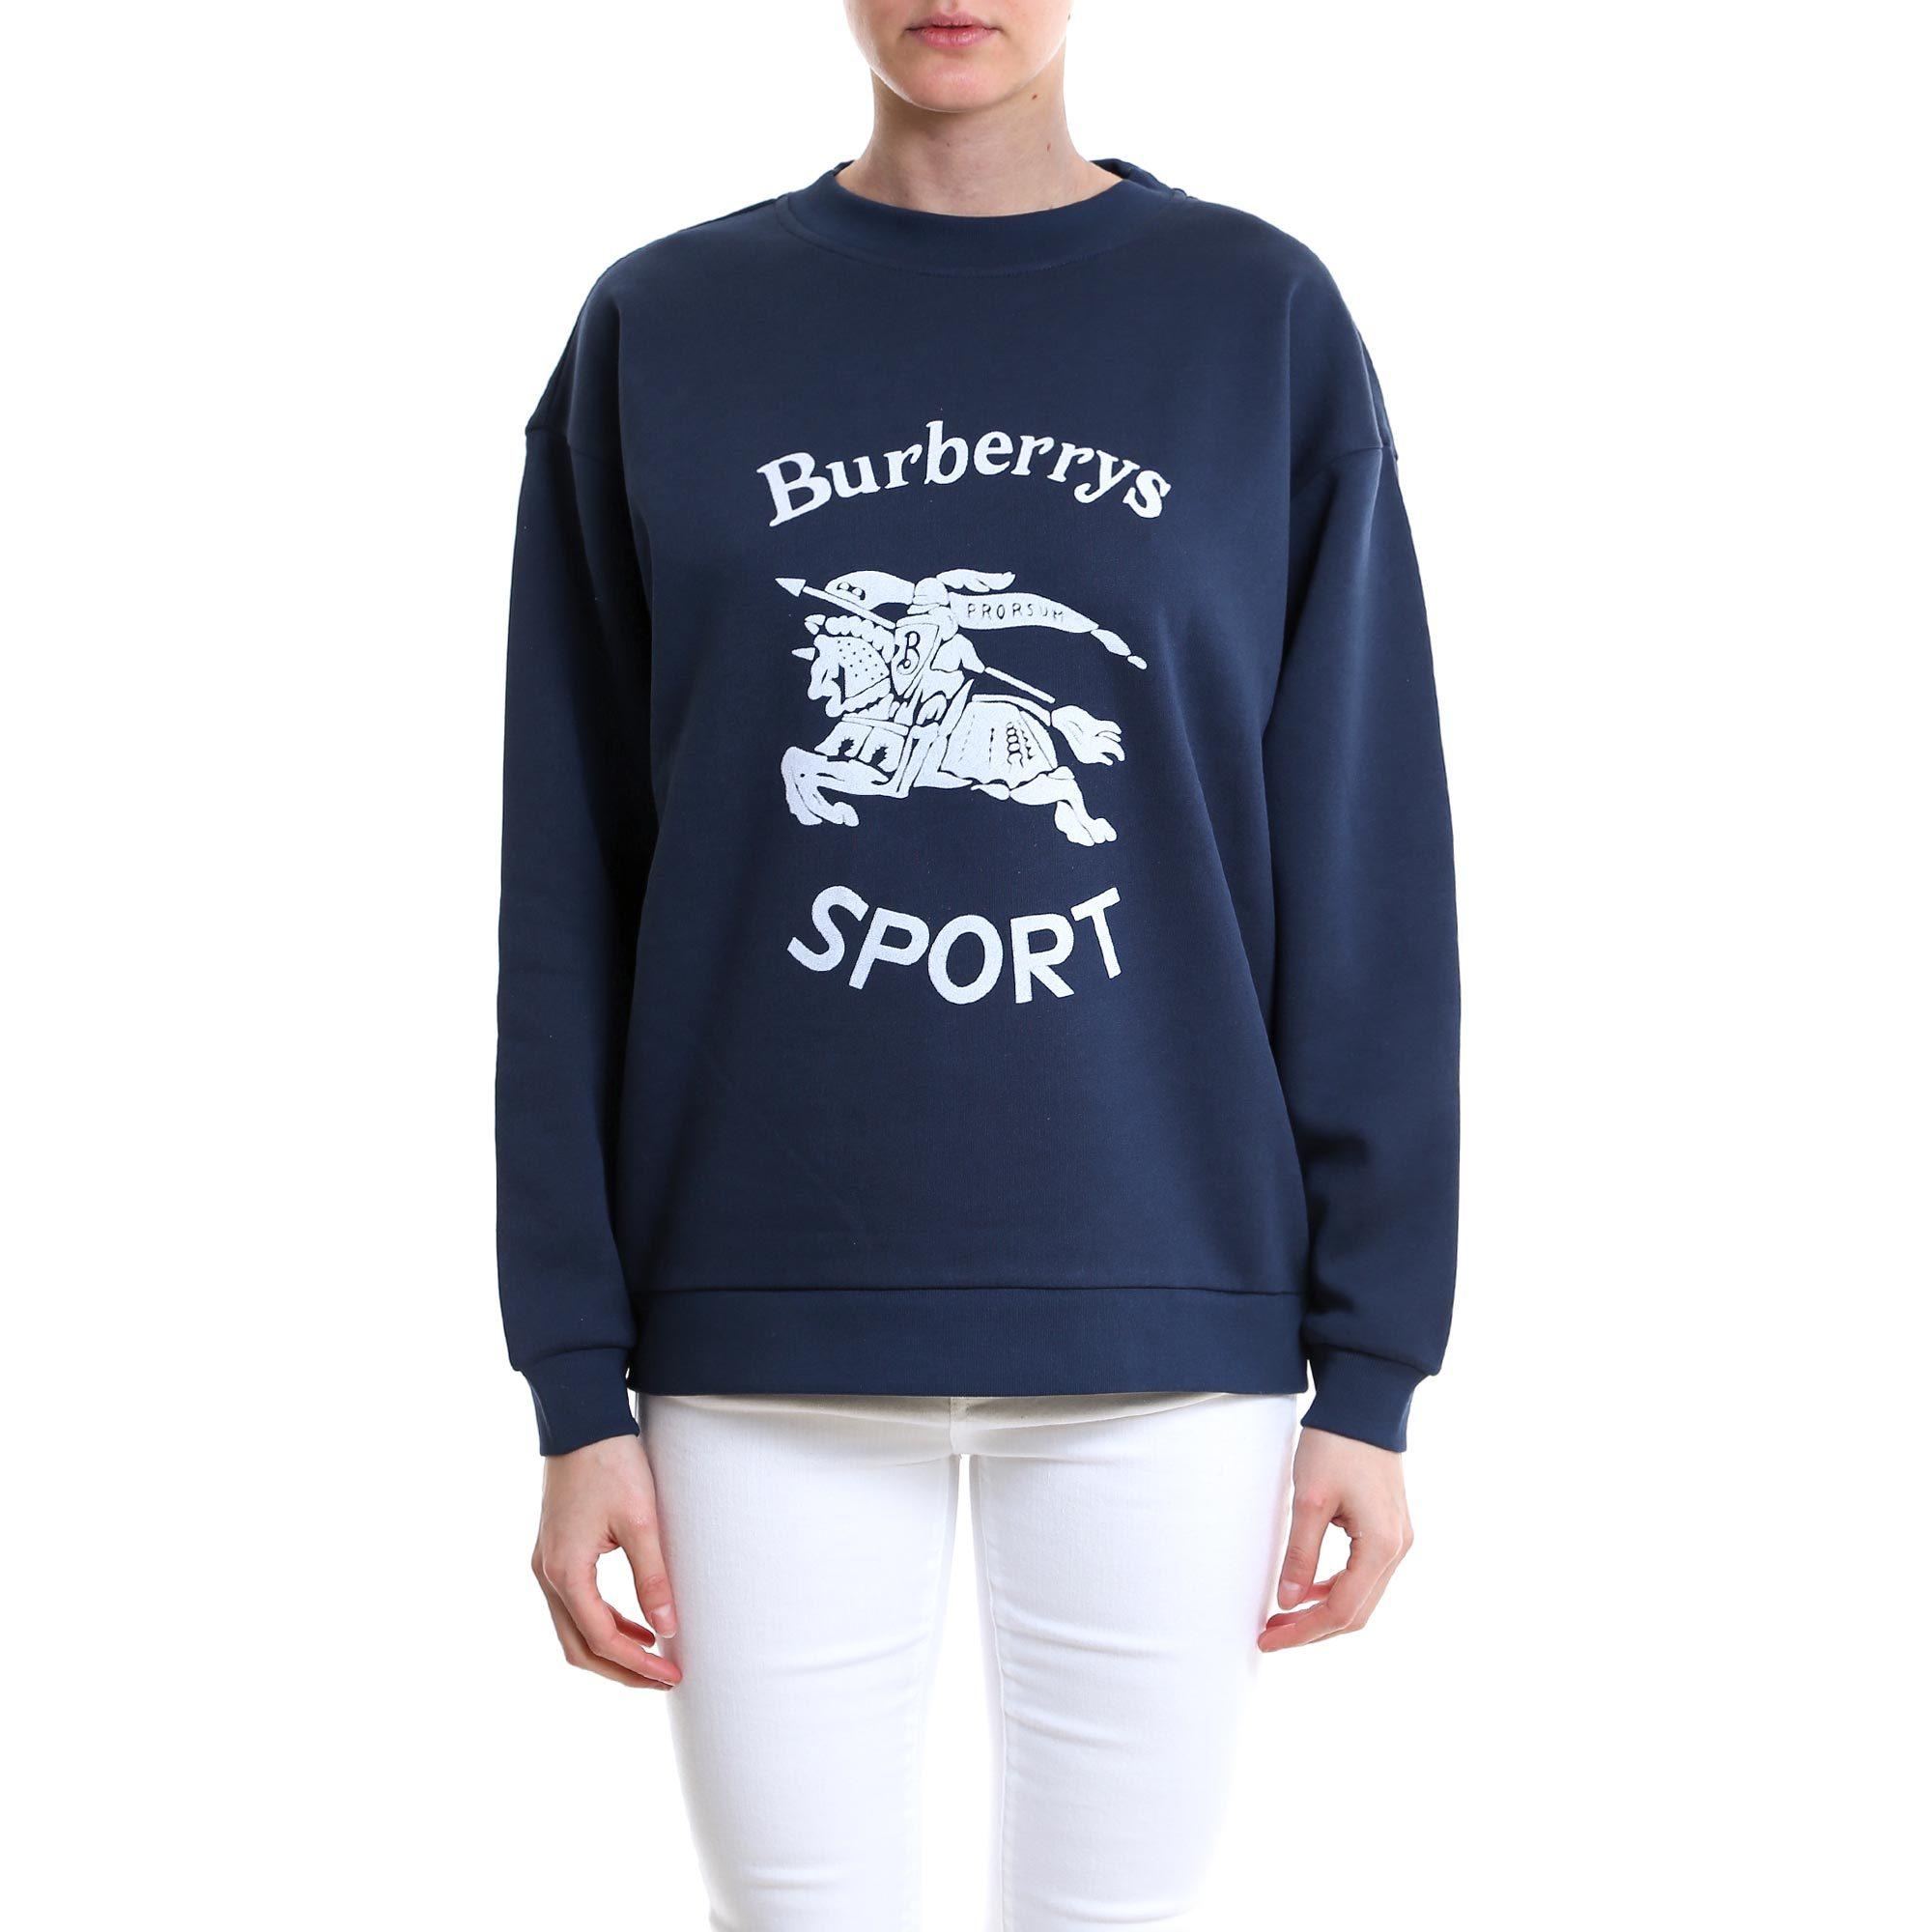 burberry sport sweater